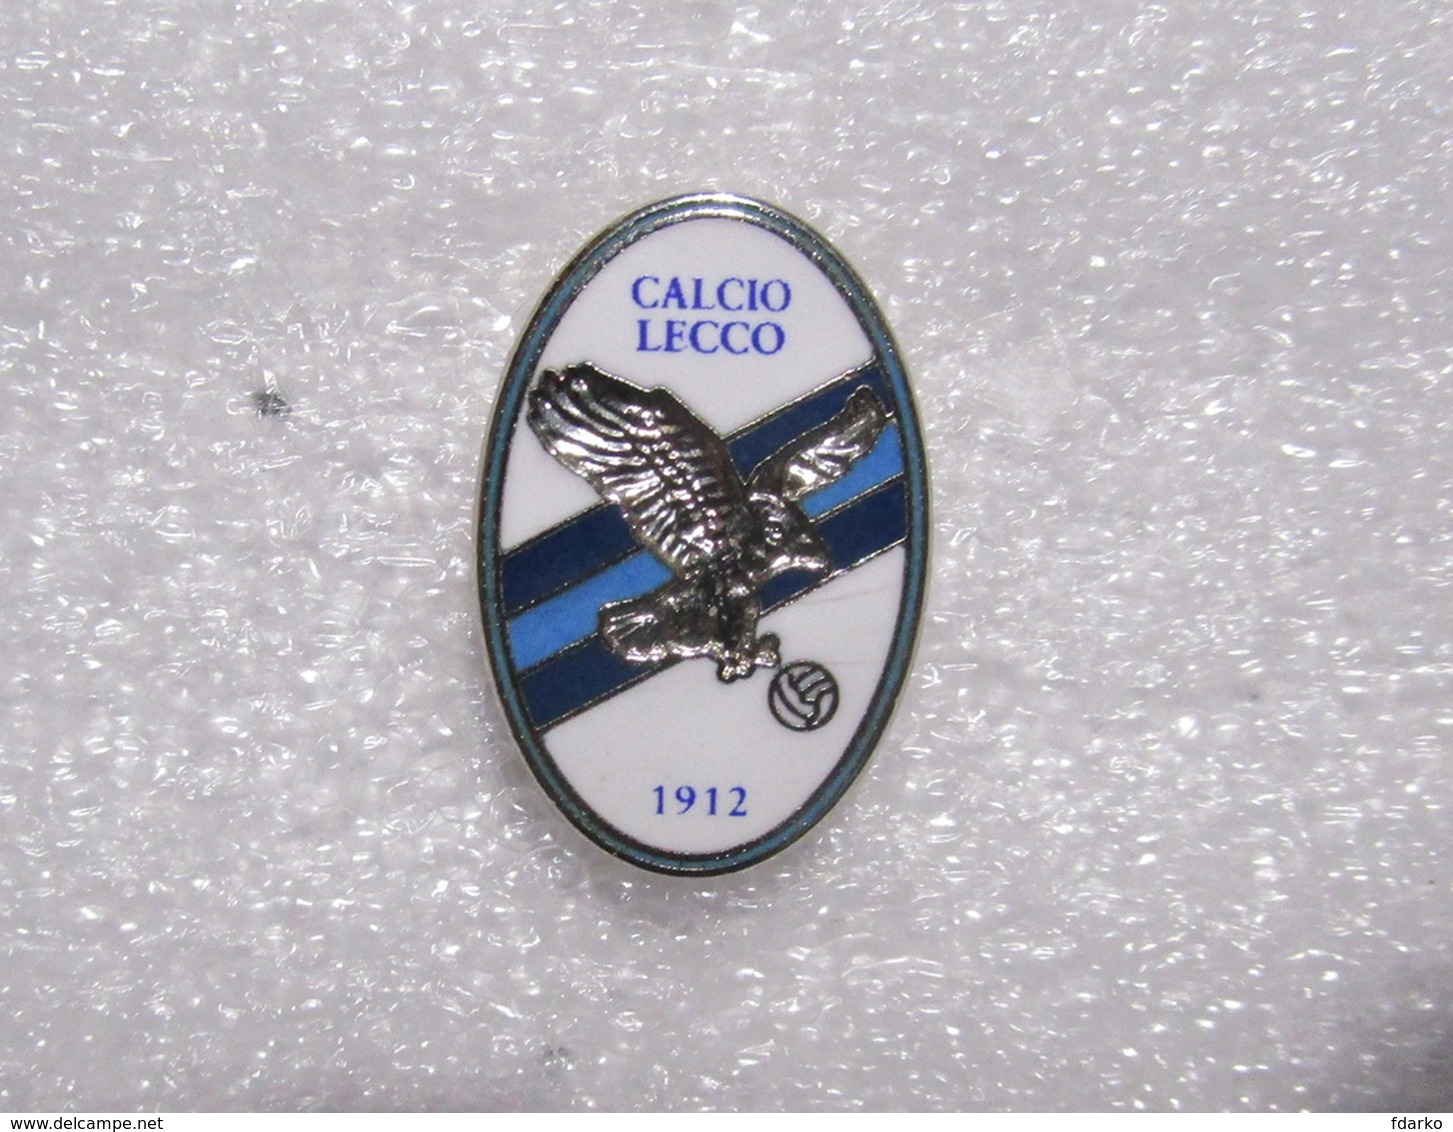 CALCIO LECCO - Distintivo Spilla Football Pins Lombardia - Calcio